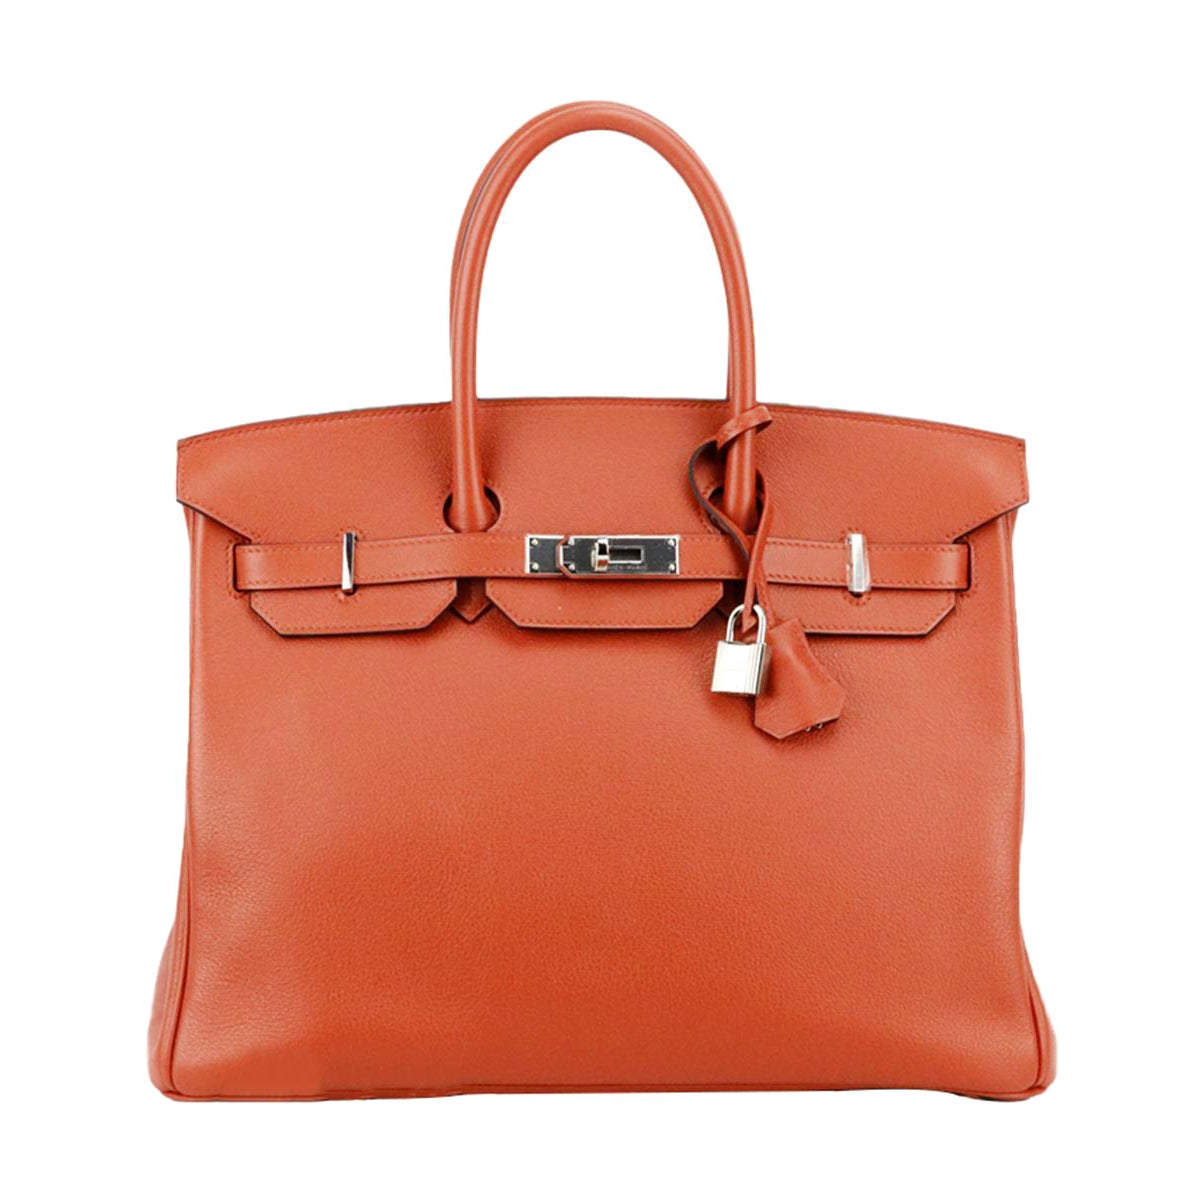 Hermès 2017 Birkin 35cm Taurillon Novillo Leather Bag For Sale